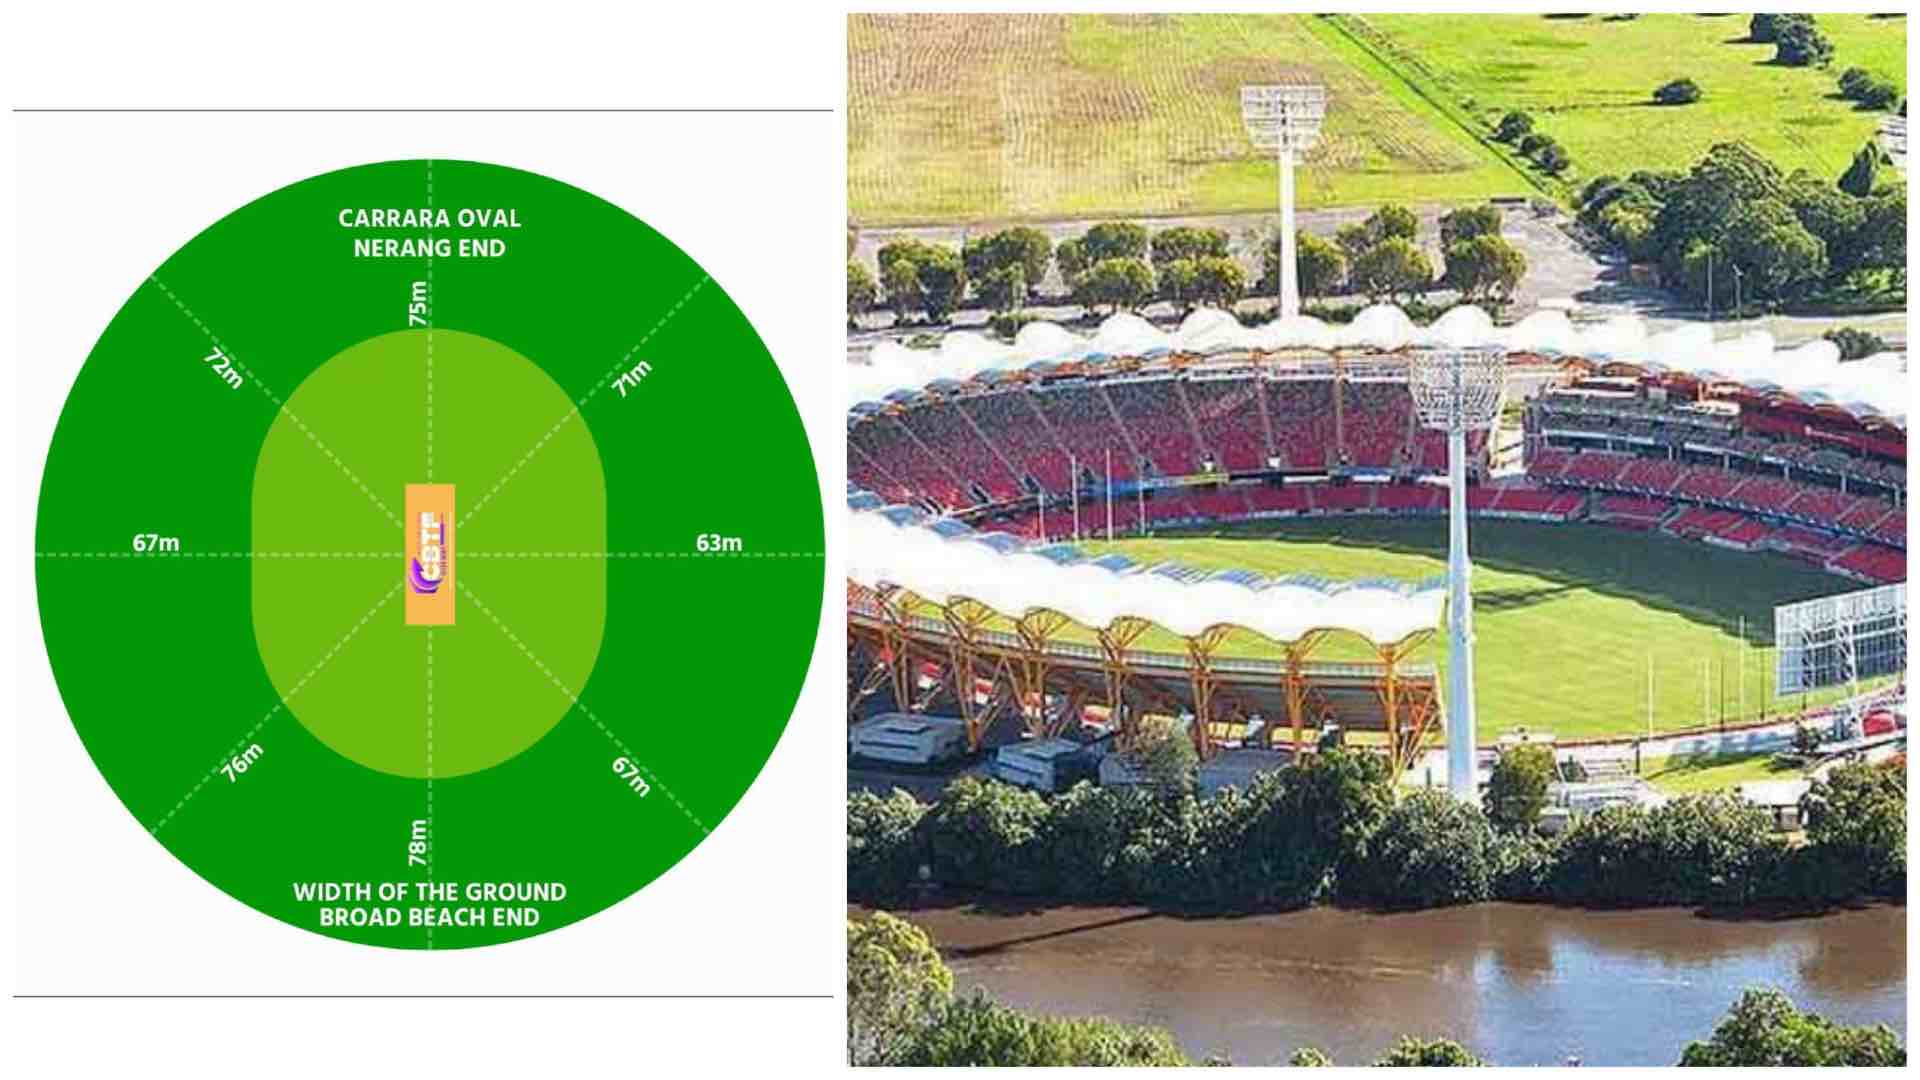 Carrara Oval Queensland Cricket Ground Boundary Length And Seating Capacity